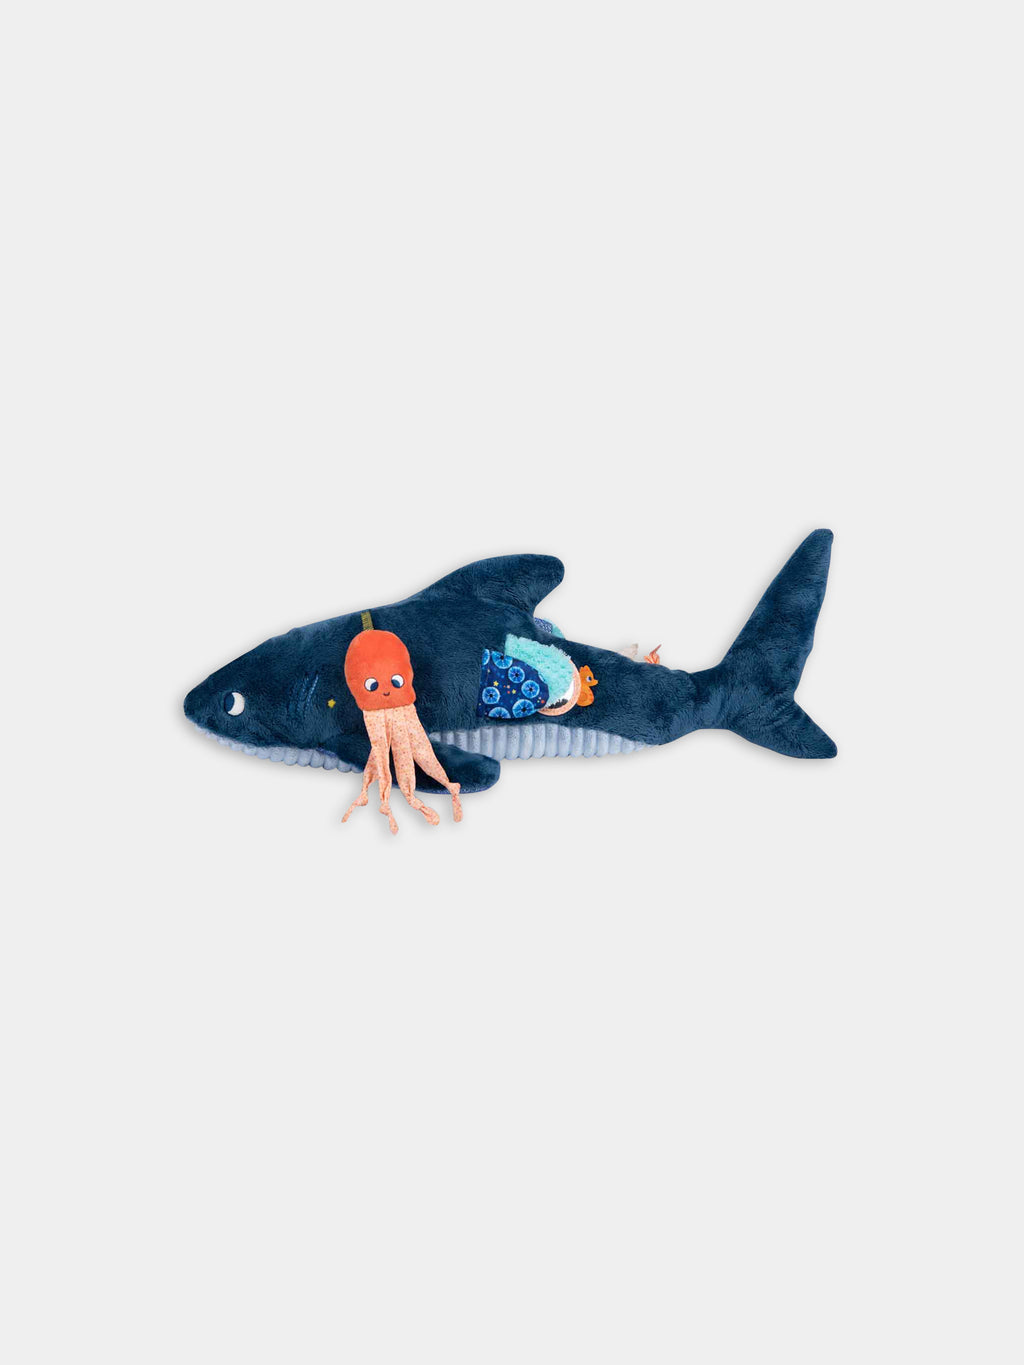 Blue shark-shaped soft toy for kids